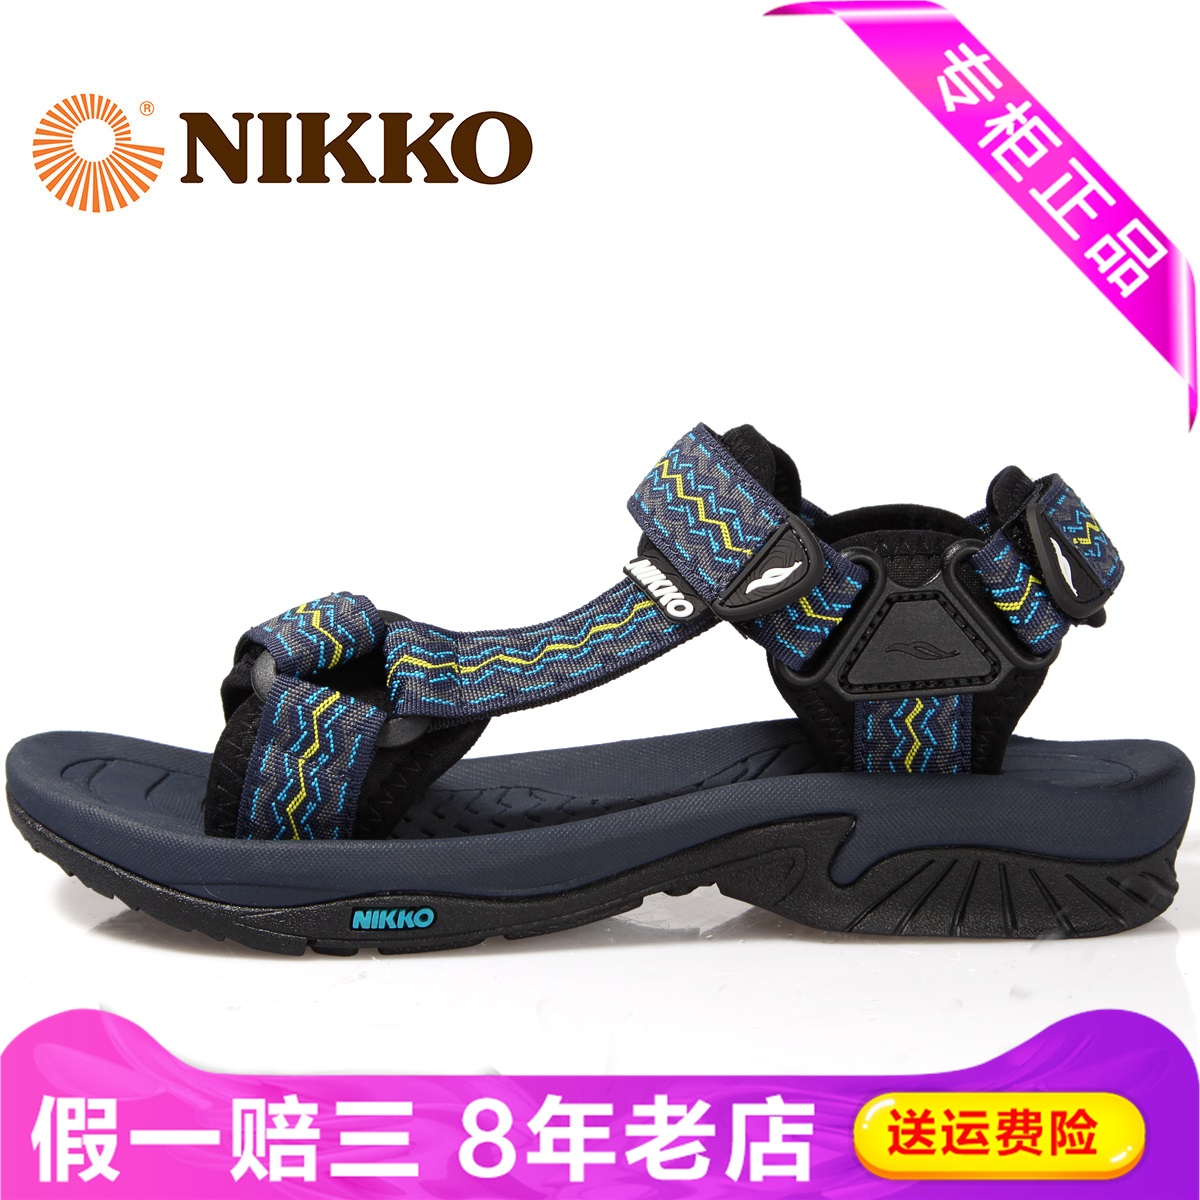 Nikko日高凉鞋防滑男沙滩专柜潜水旅游折叠便携沙滩鞋bs-5123001